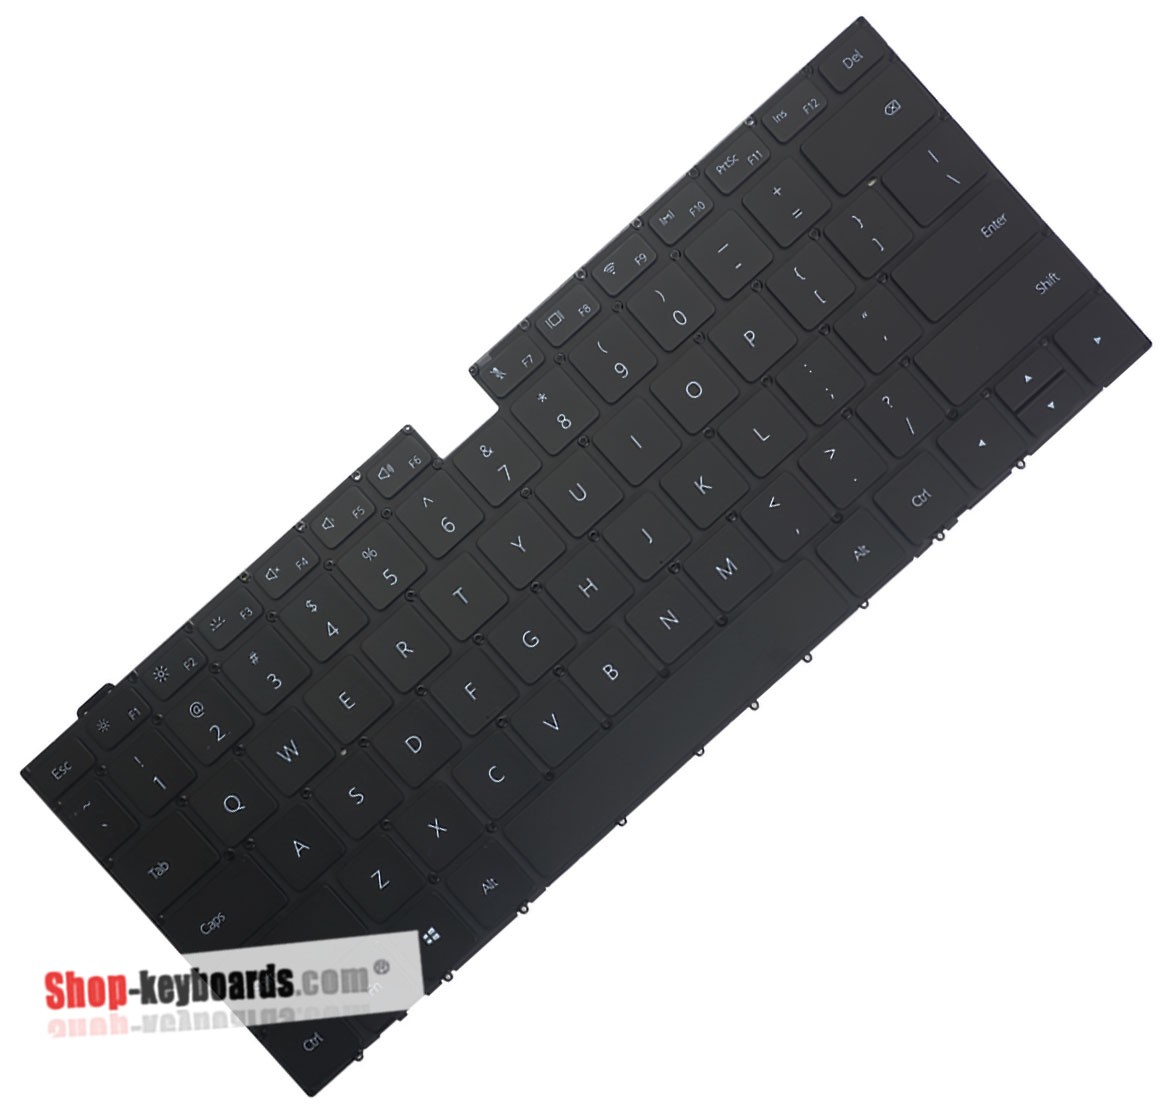 HUAWEI 9Z.NEXBH.001 Keyboard replacement